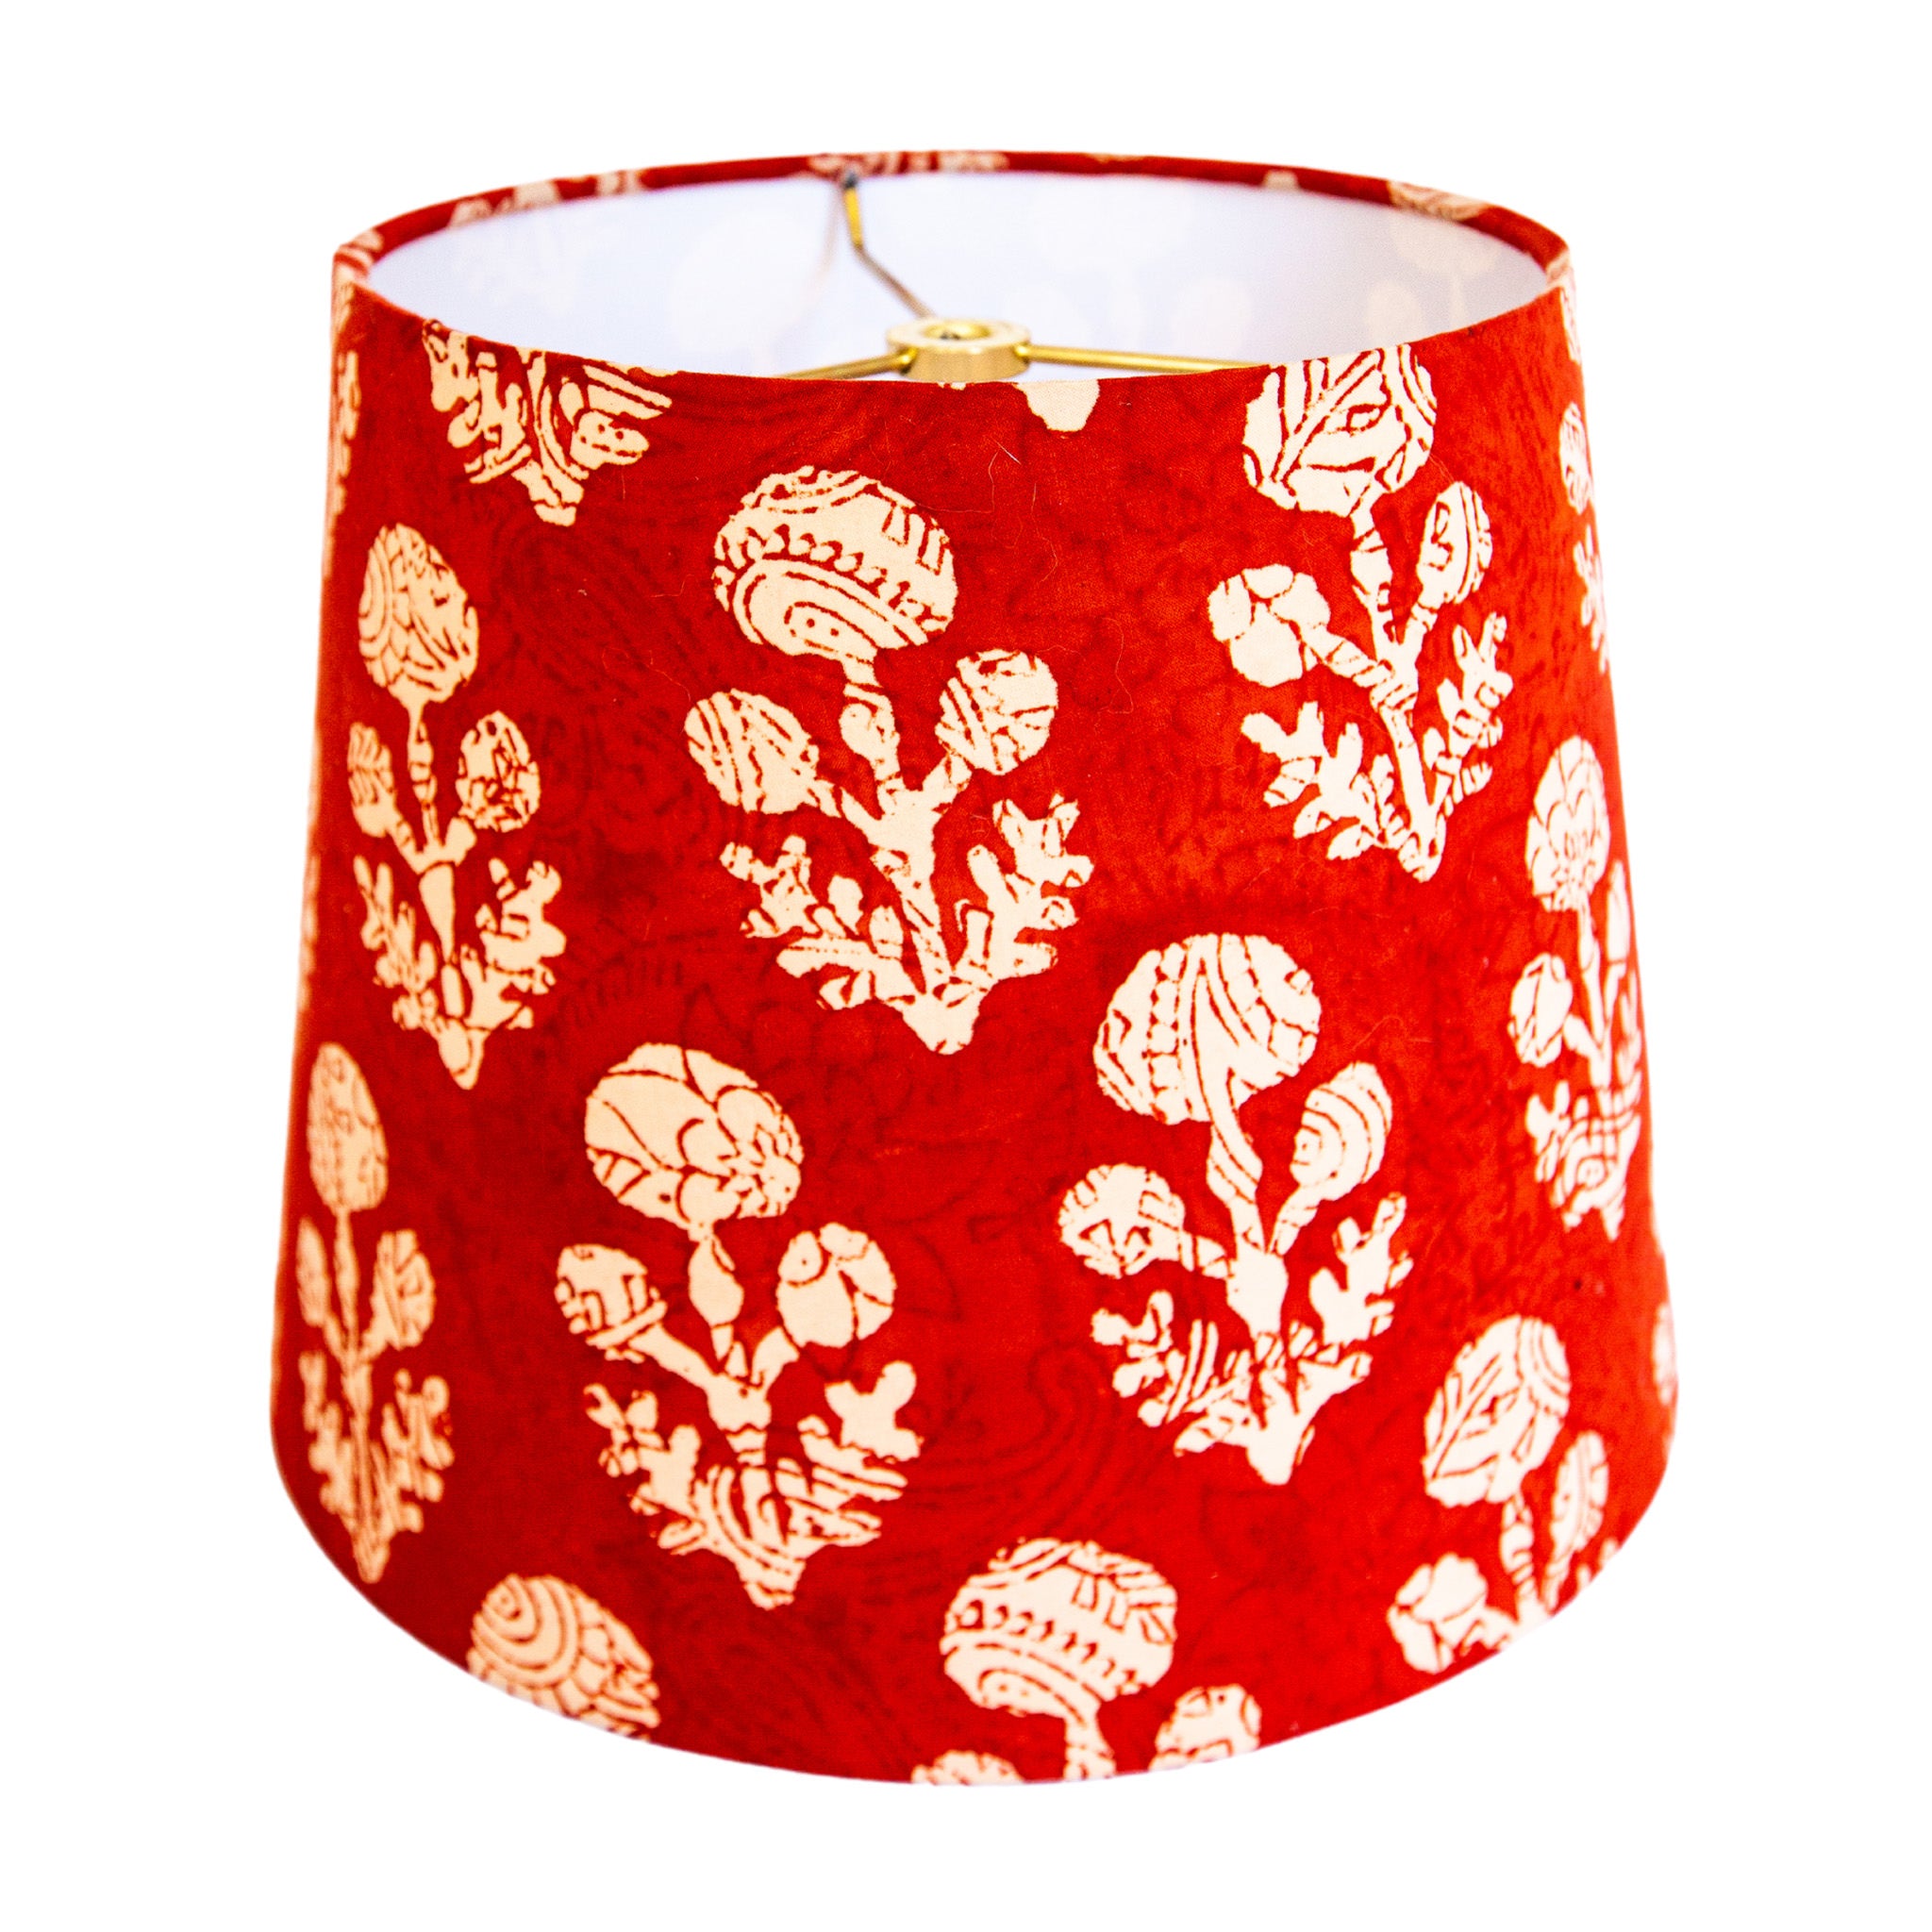 Ali – Red & White Foliage Blockprint Bespoke Empire Lamp Shade